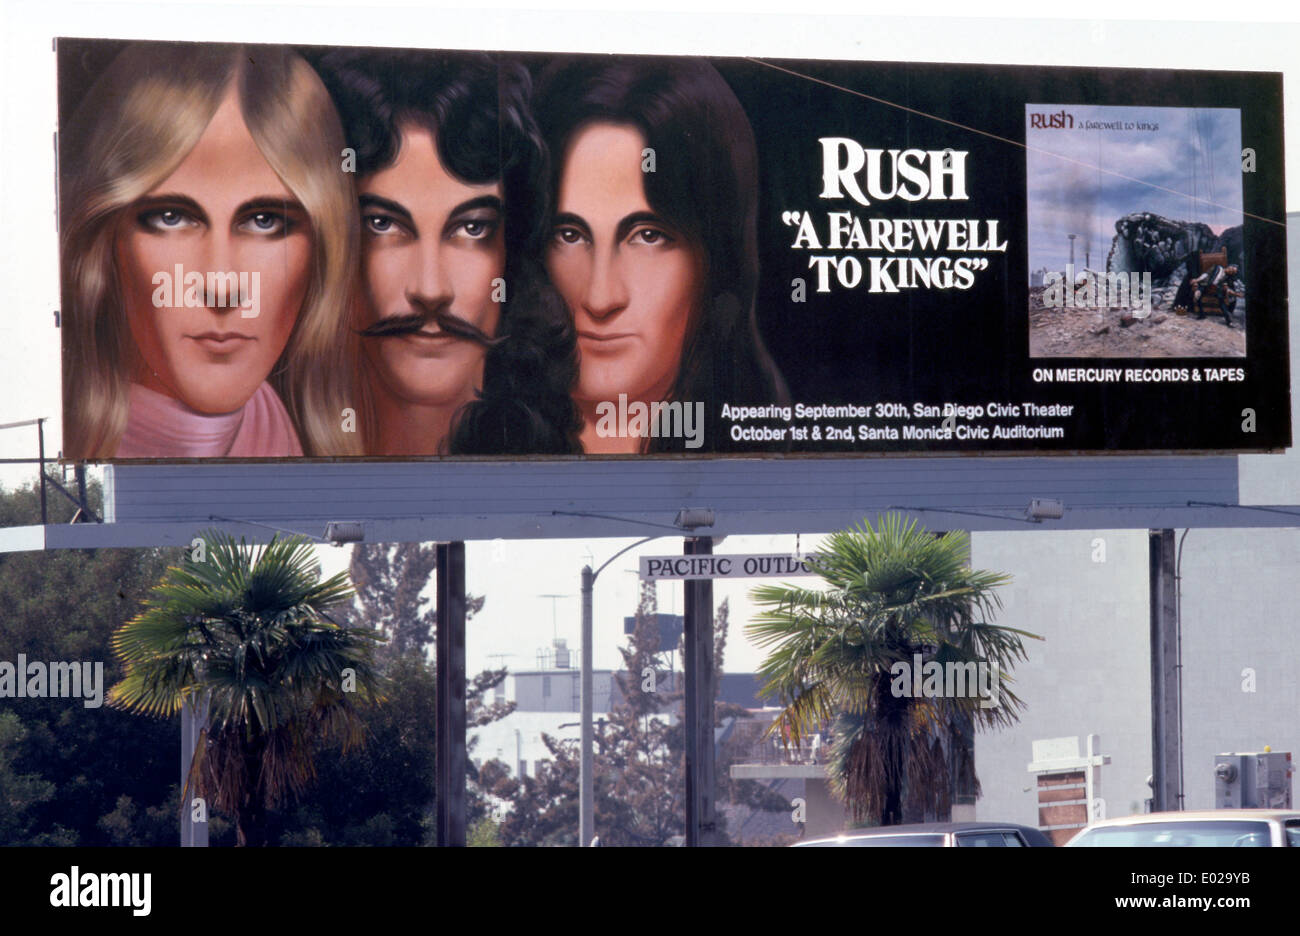 rush-billboard-on-the-sunset-strip-circa-1977-E029YB.jpg